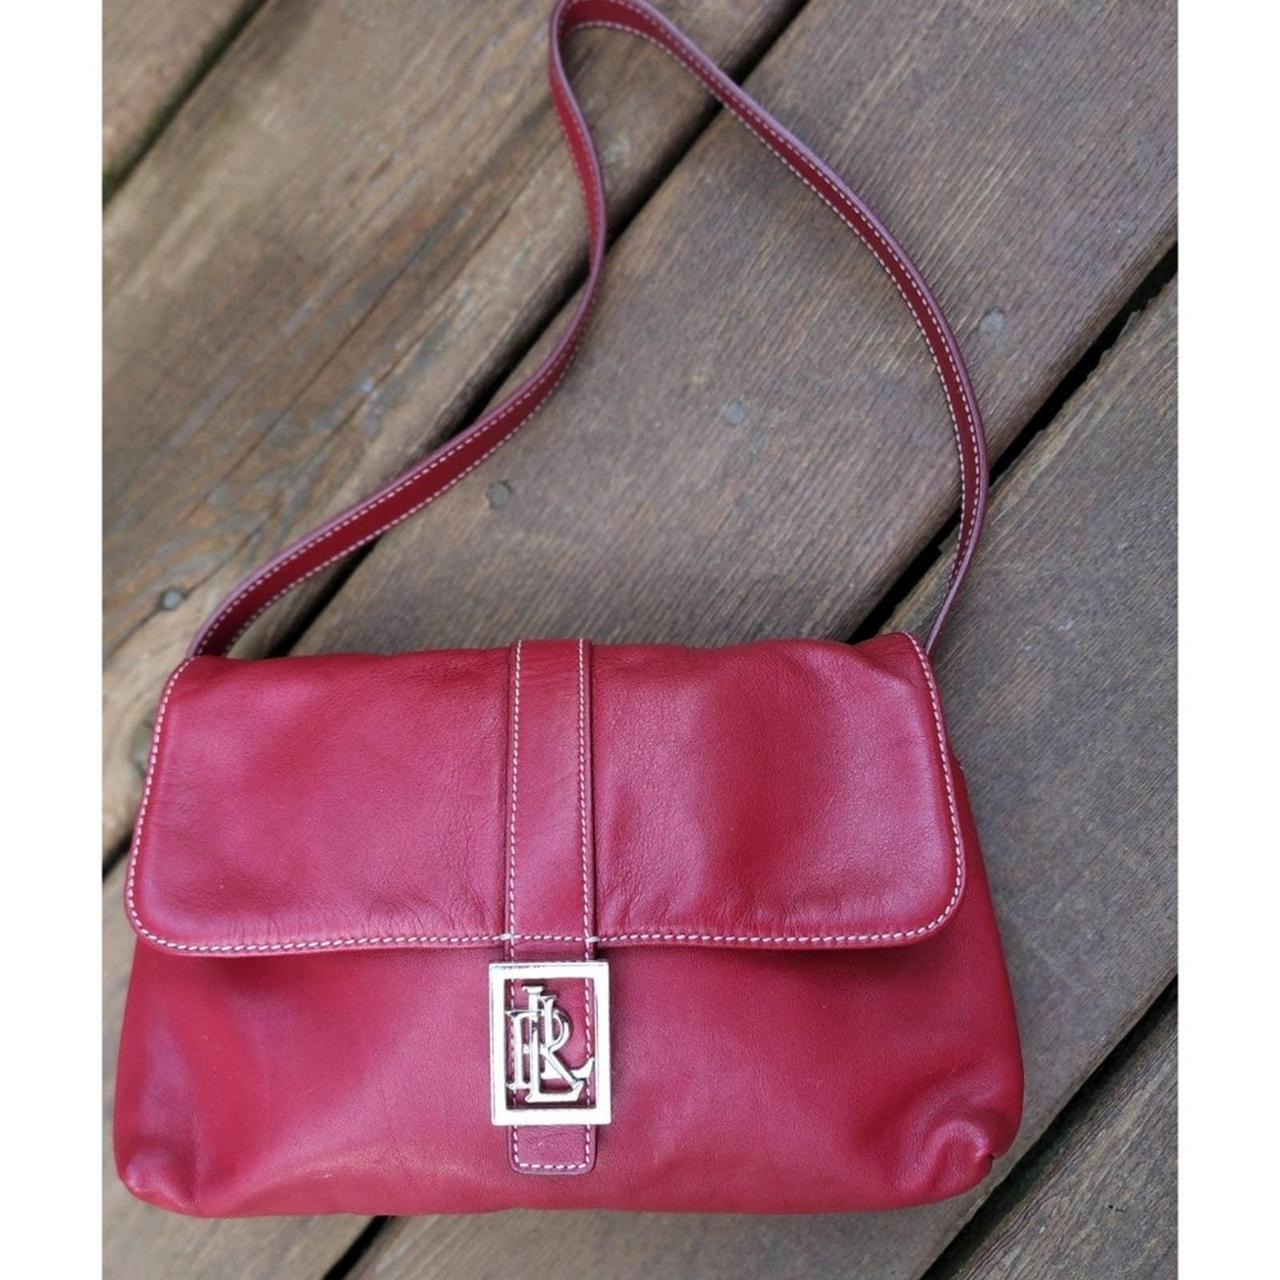 Ralph Lauren Women's Red and Silver Bag